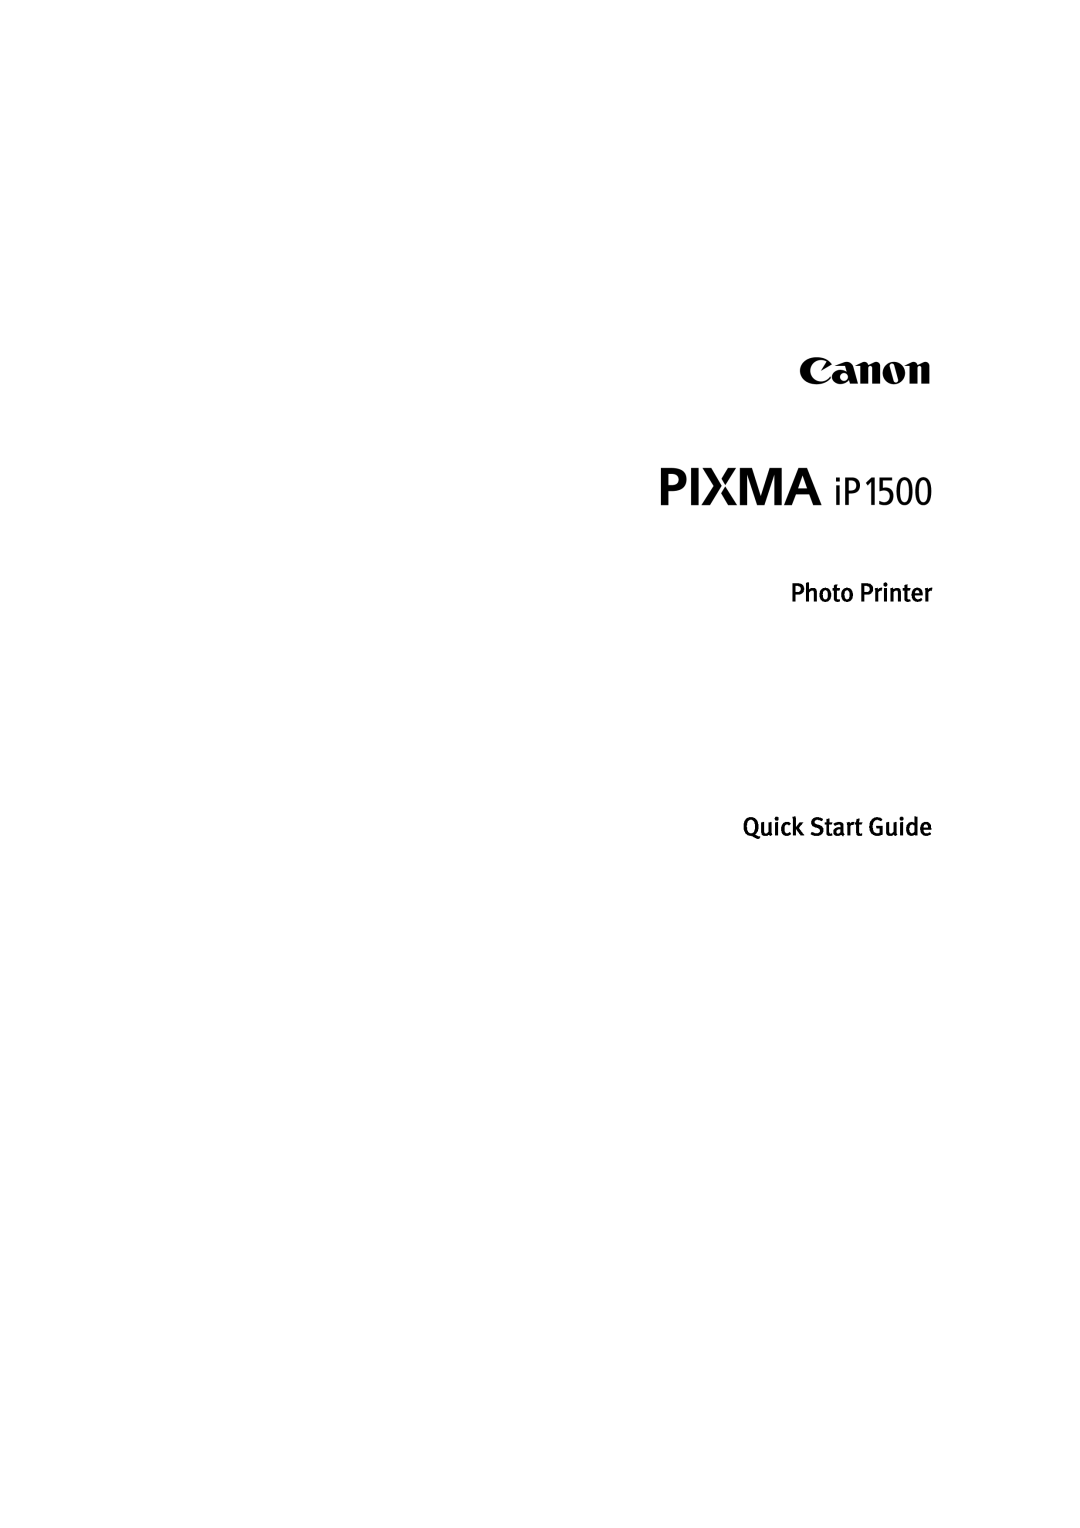 Canon IP1500 quick start Photo Printer Quick Start Guide 